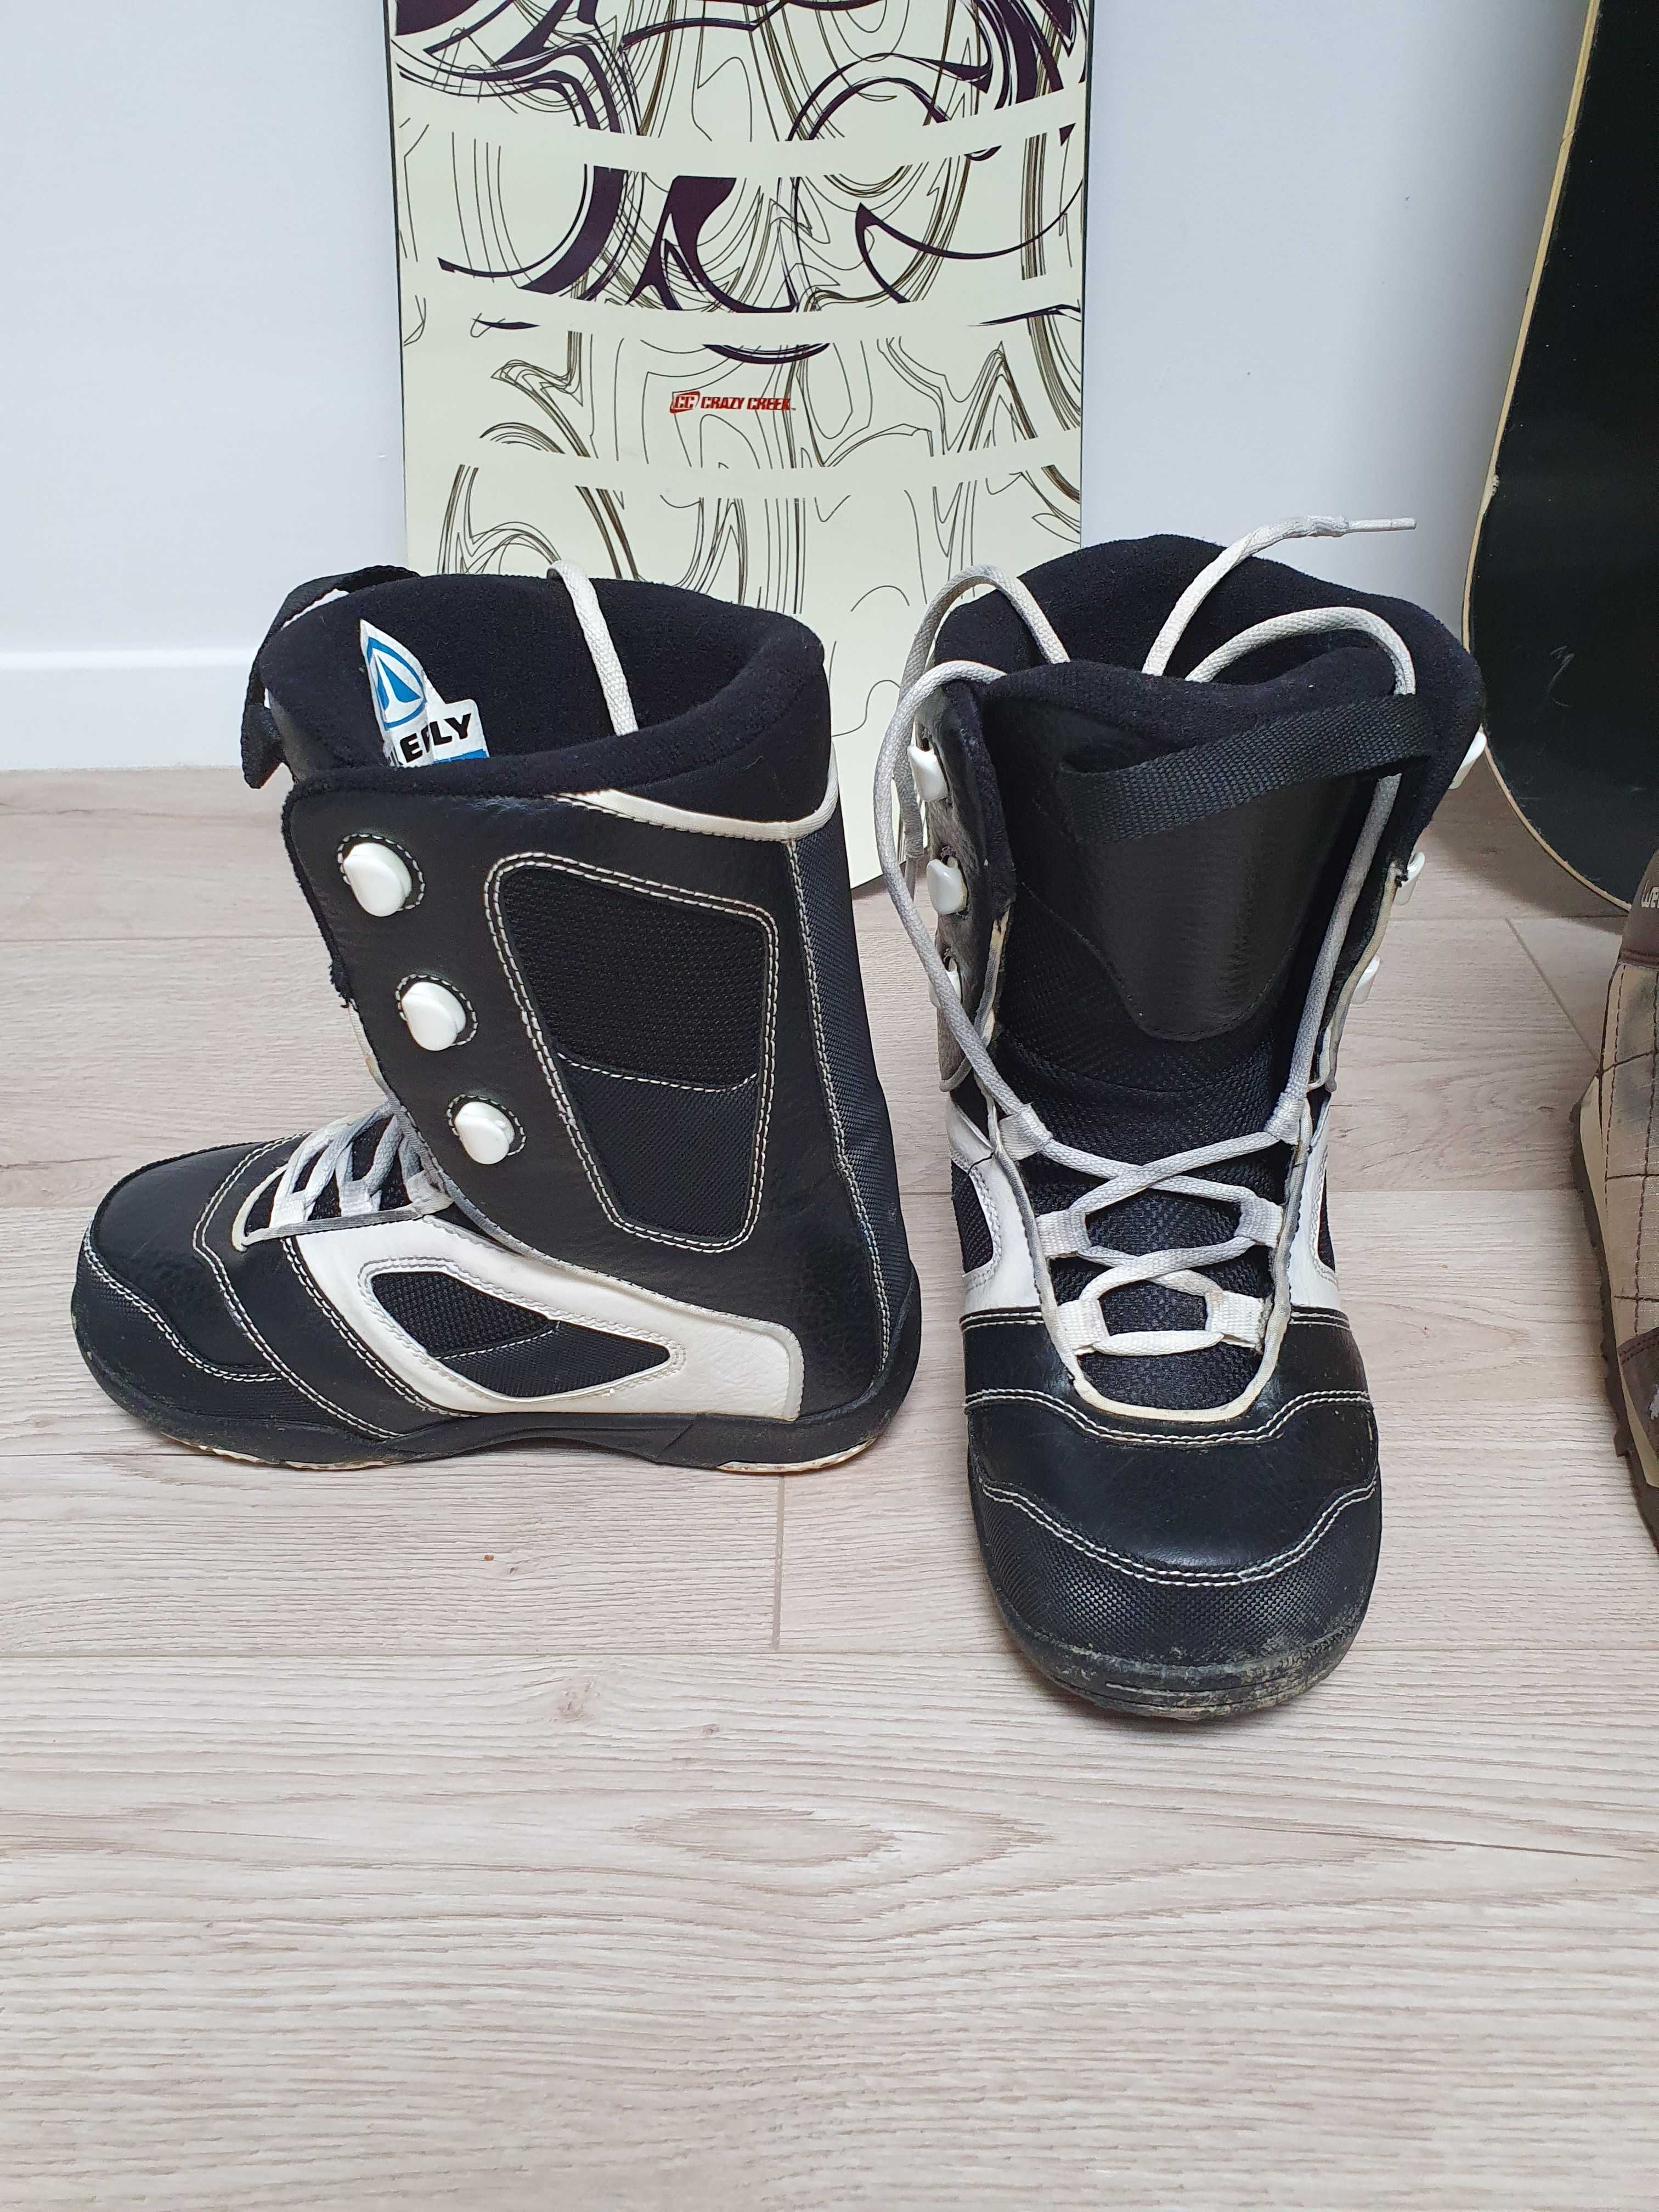 Snowboard Dynastar  + boots si legaturi